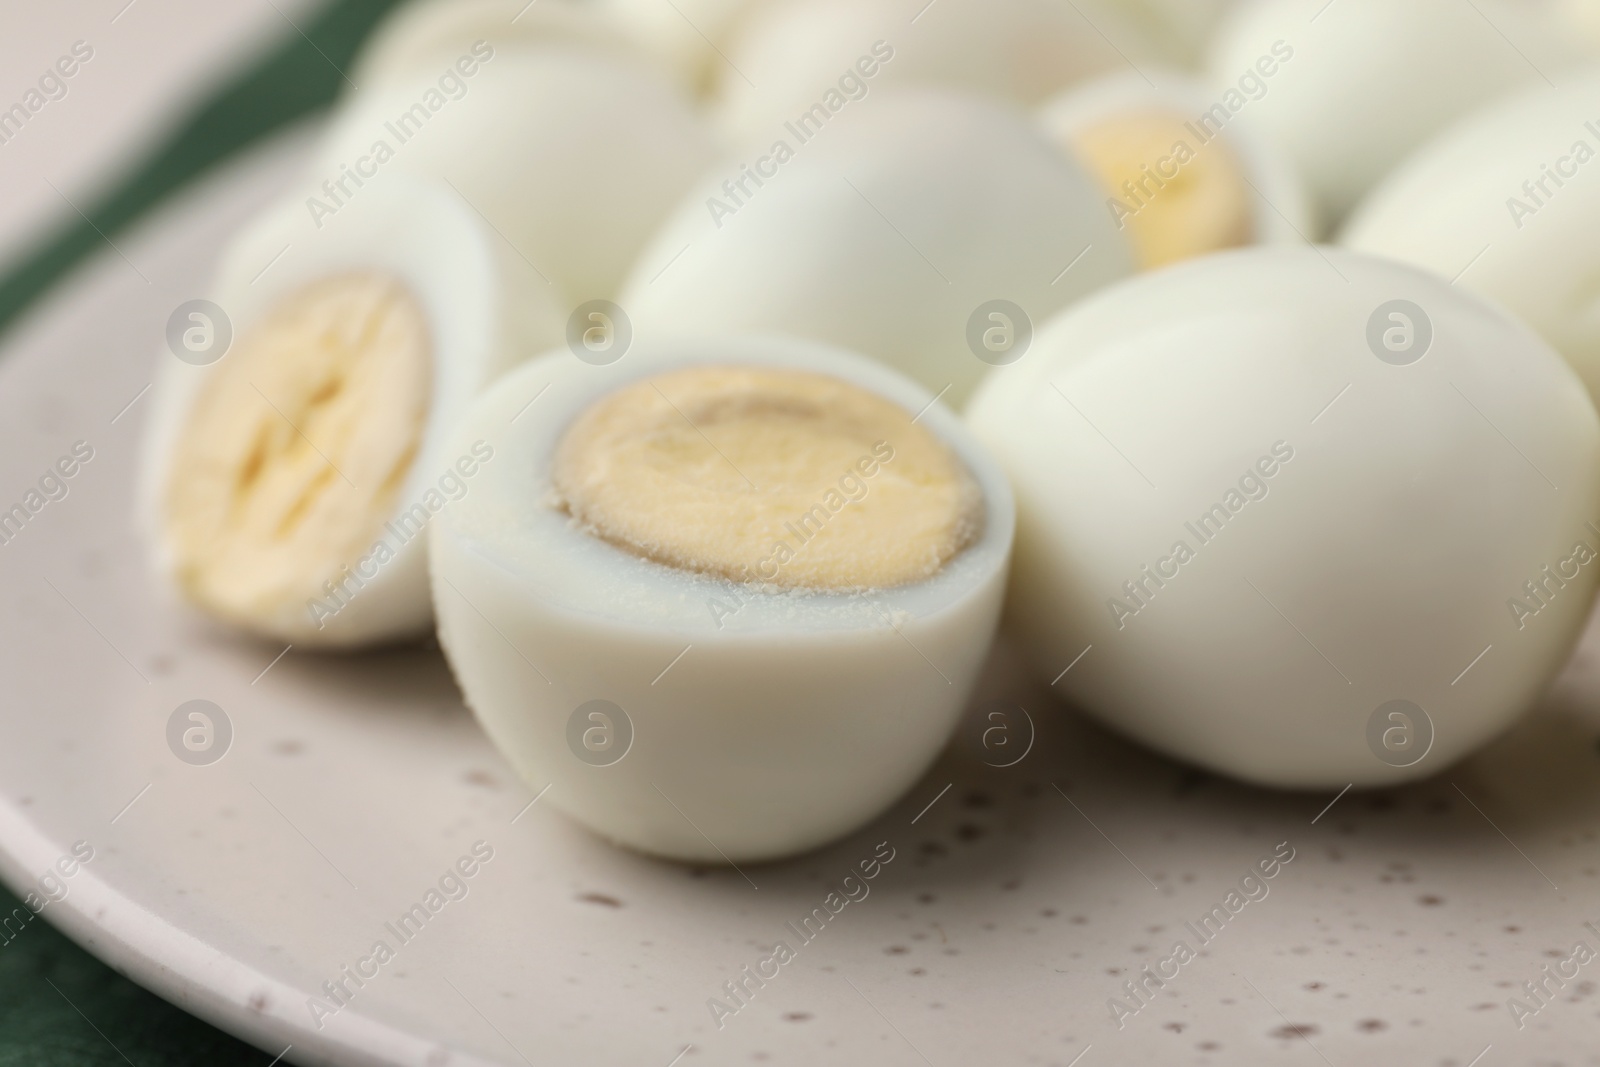 Photo of Many peeled hard boiled quail eggs on plate, closeup